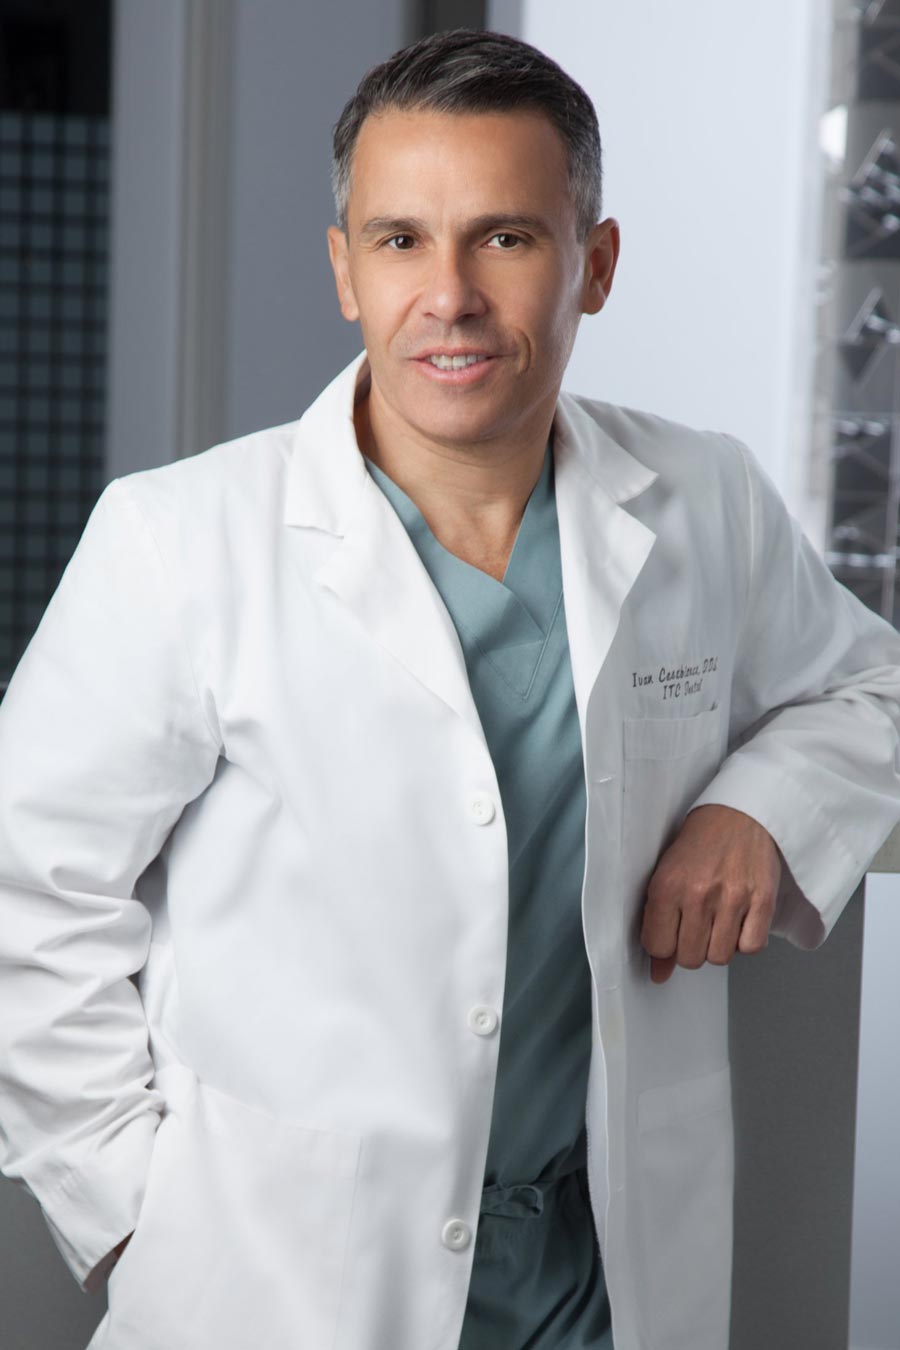 Dr Ivan Casabianca - dentist in Orange County - laguna hills, Newport beach